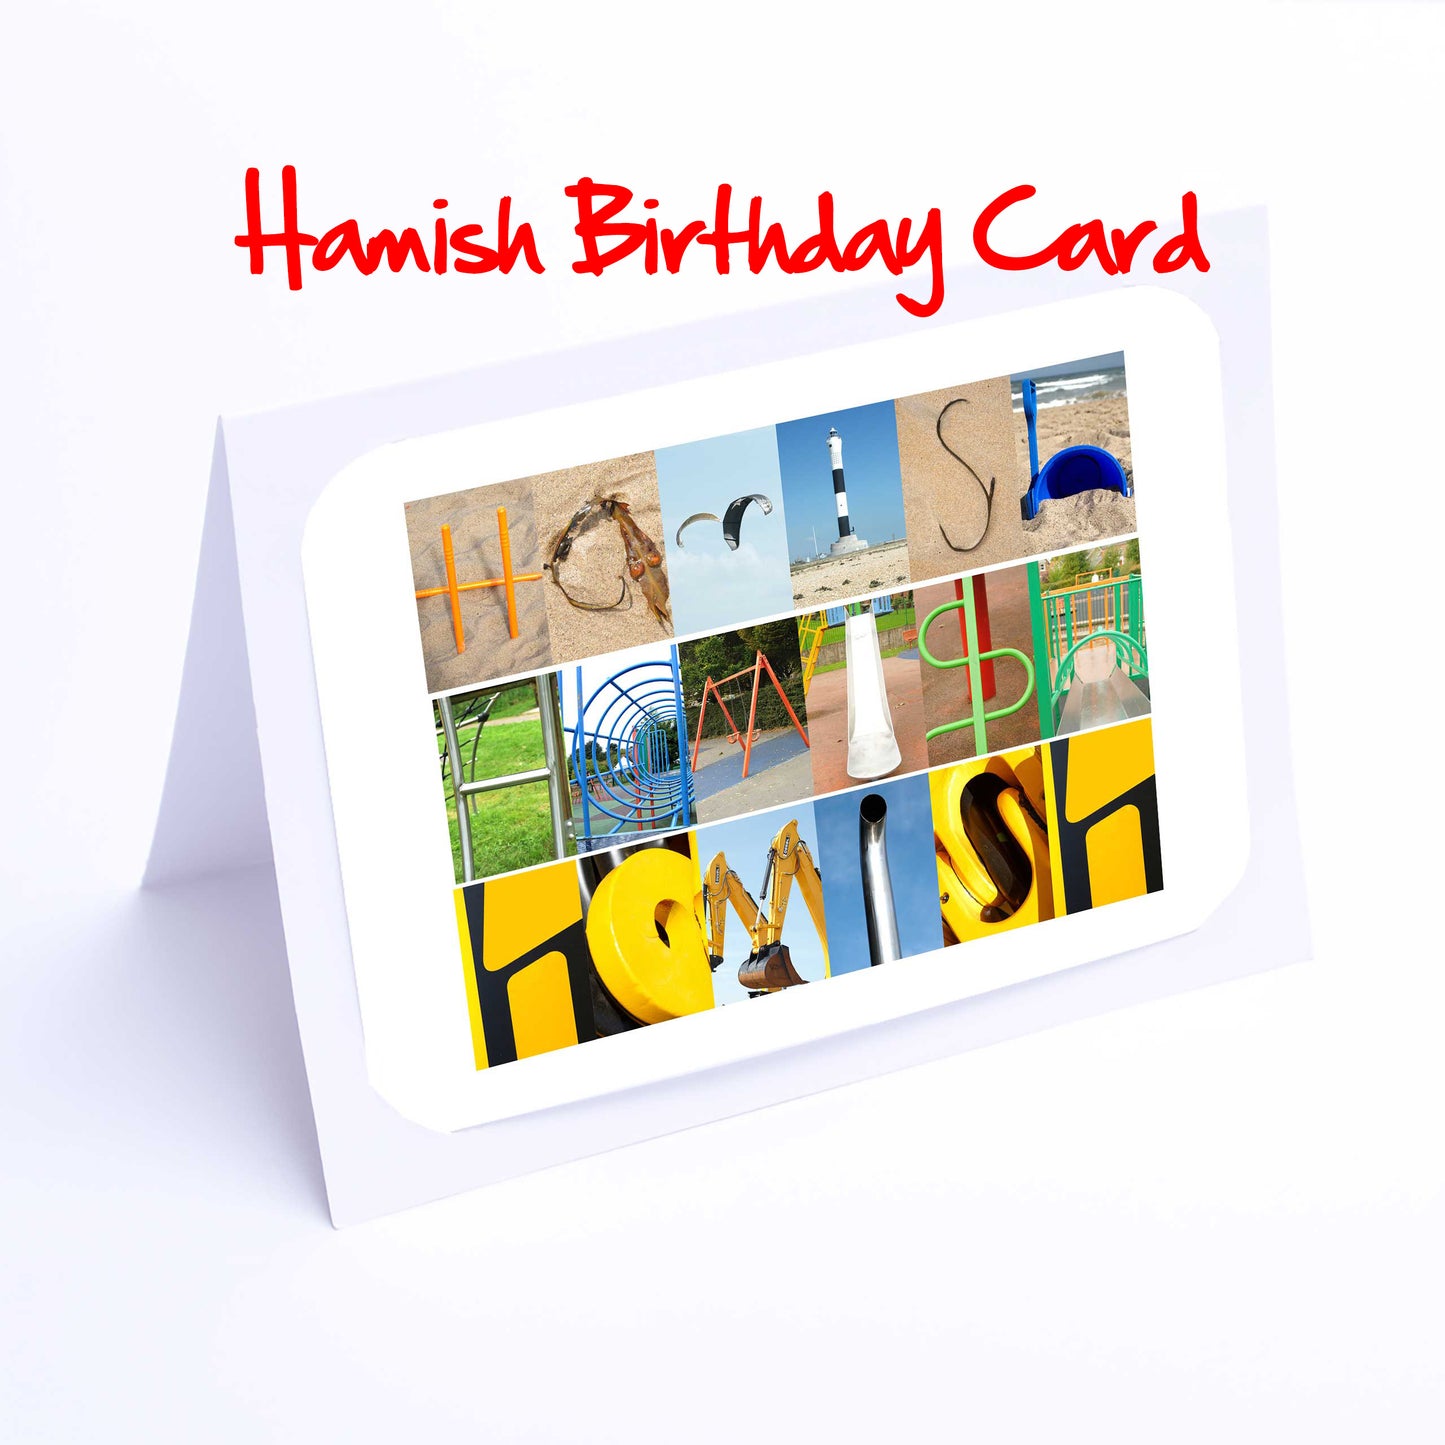 Ha - Isa Boys Personalised Card - Harry, Hal, Hamish, Harley, Harris, Harrison, Harvey, Henry, Isaac Any name - Personalised Birthday Card